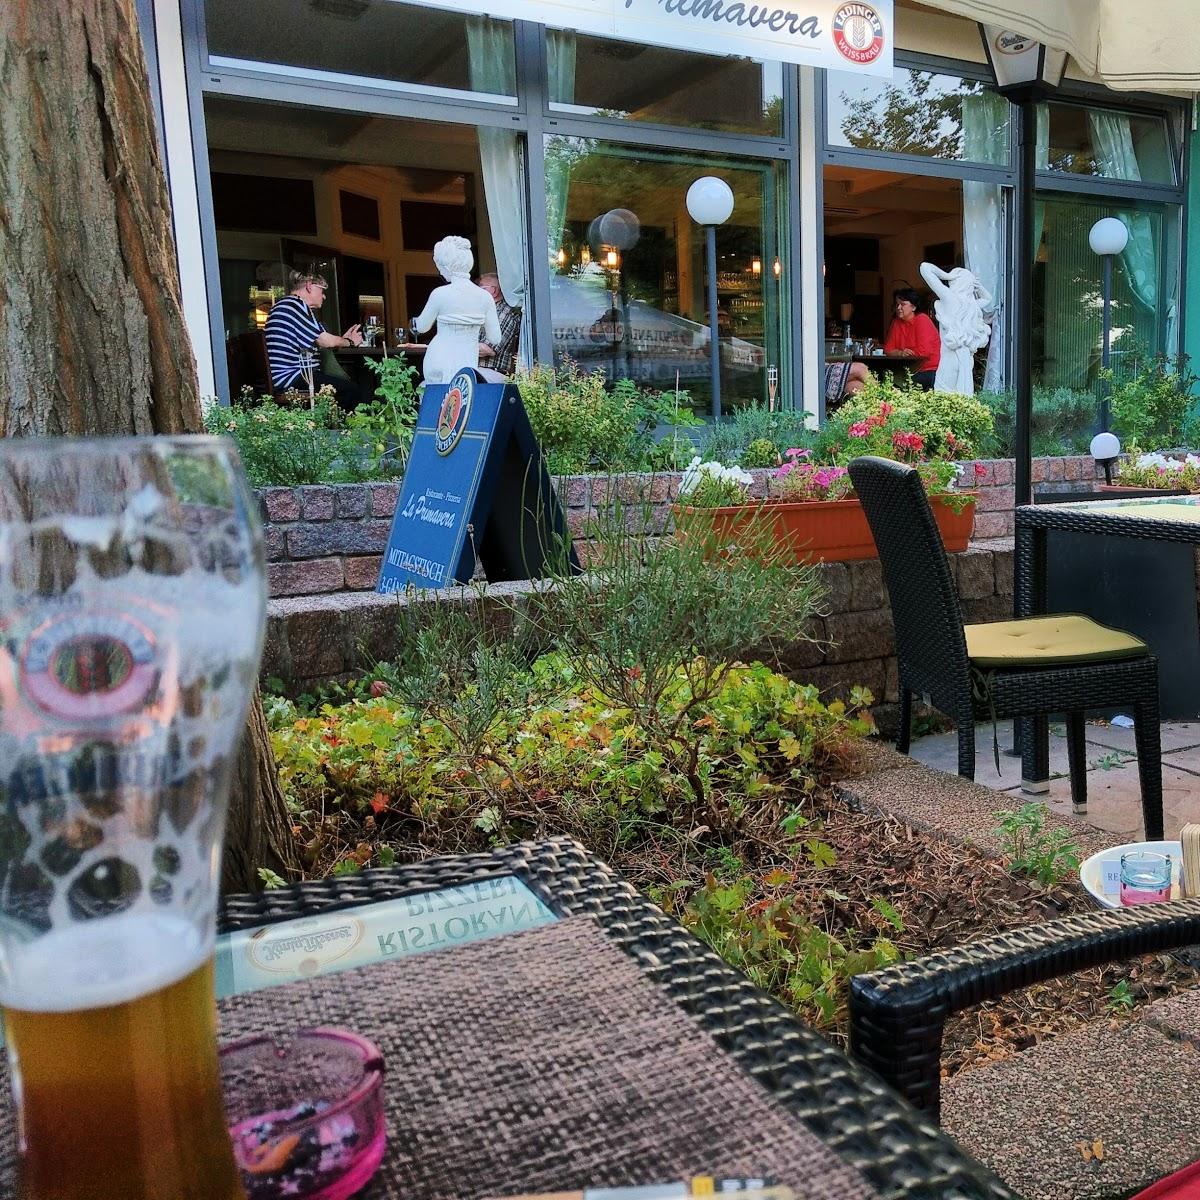 Restaurant "La Primavera" in Mainz